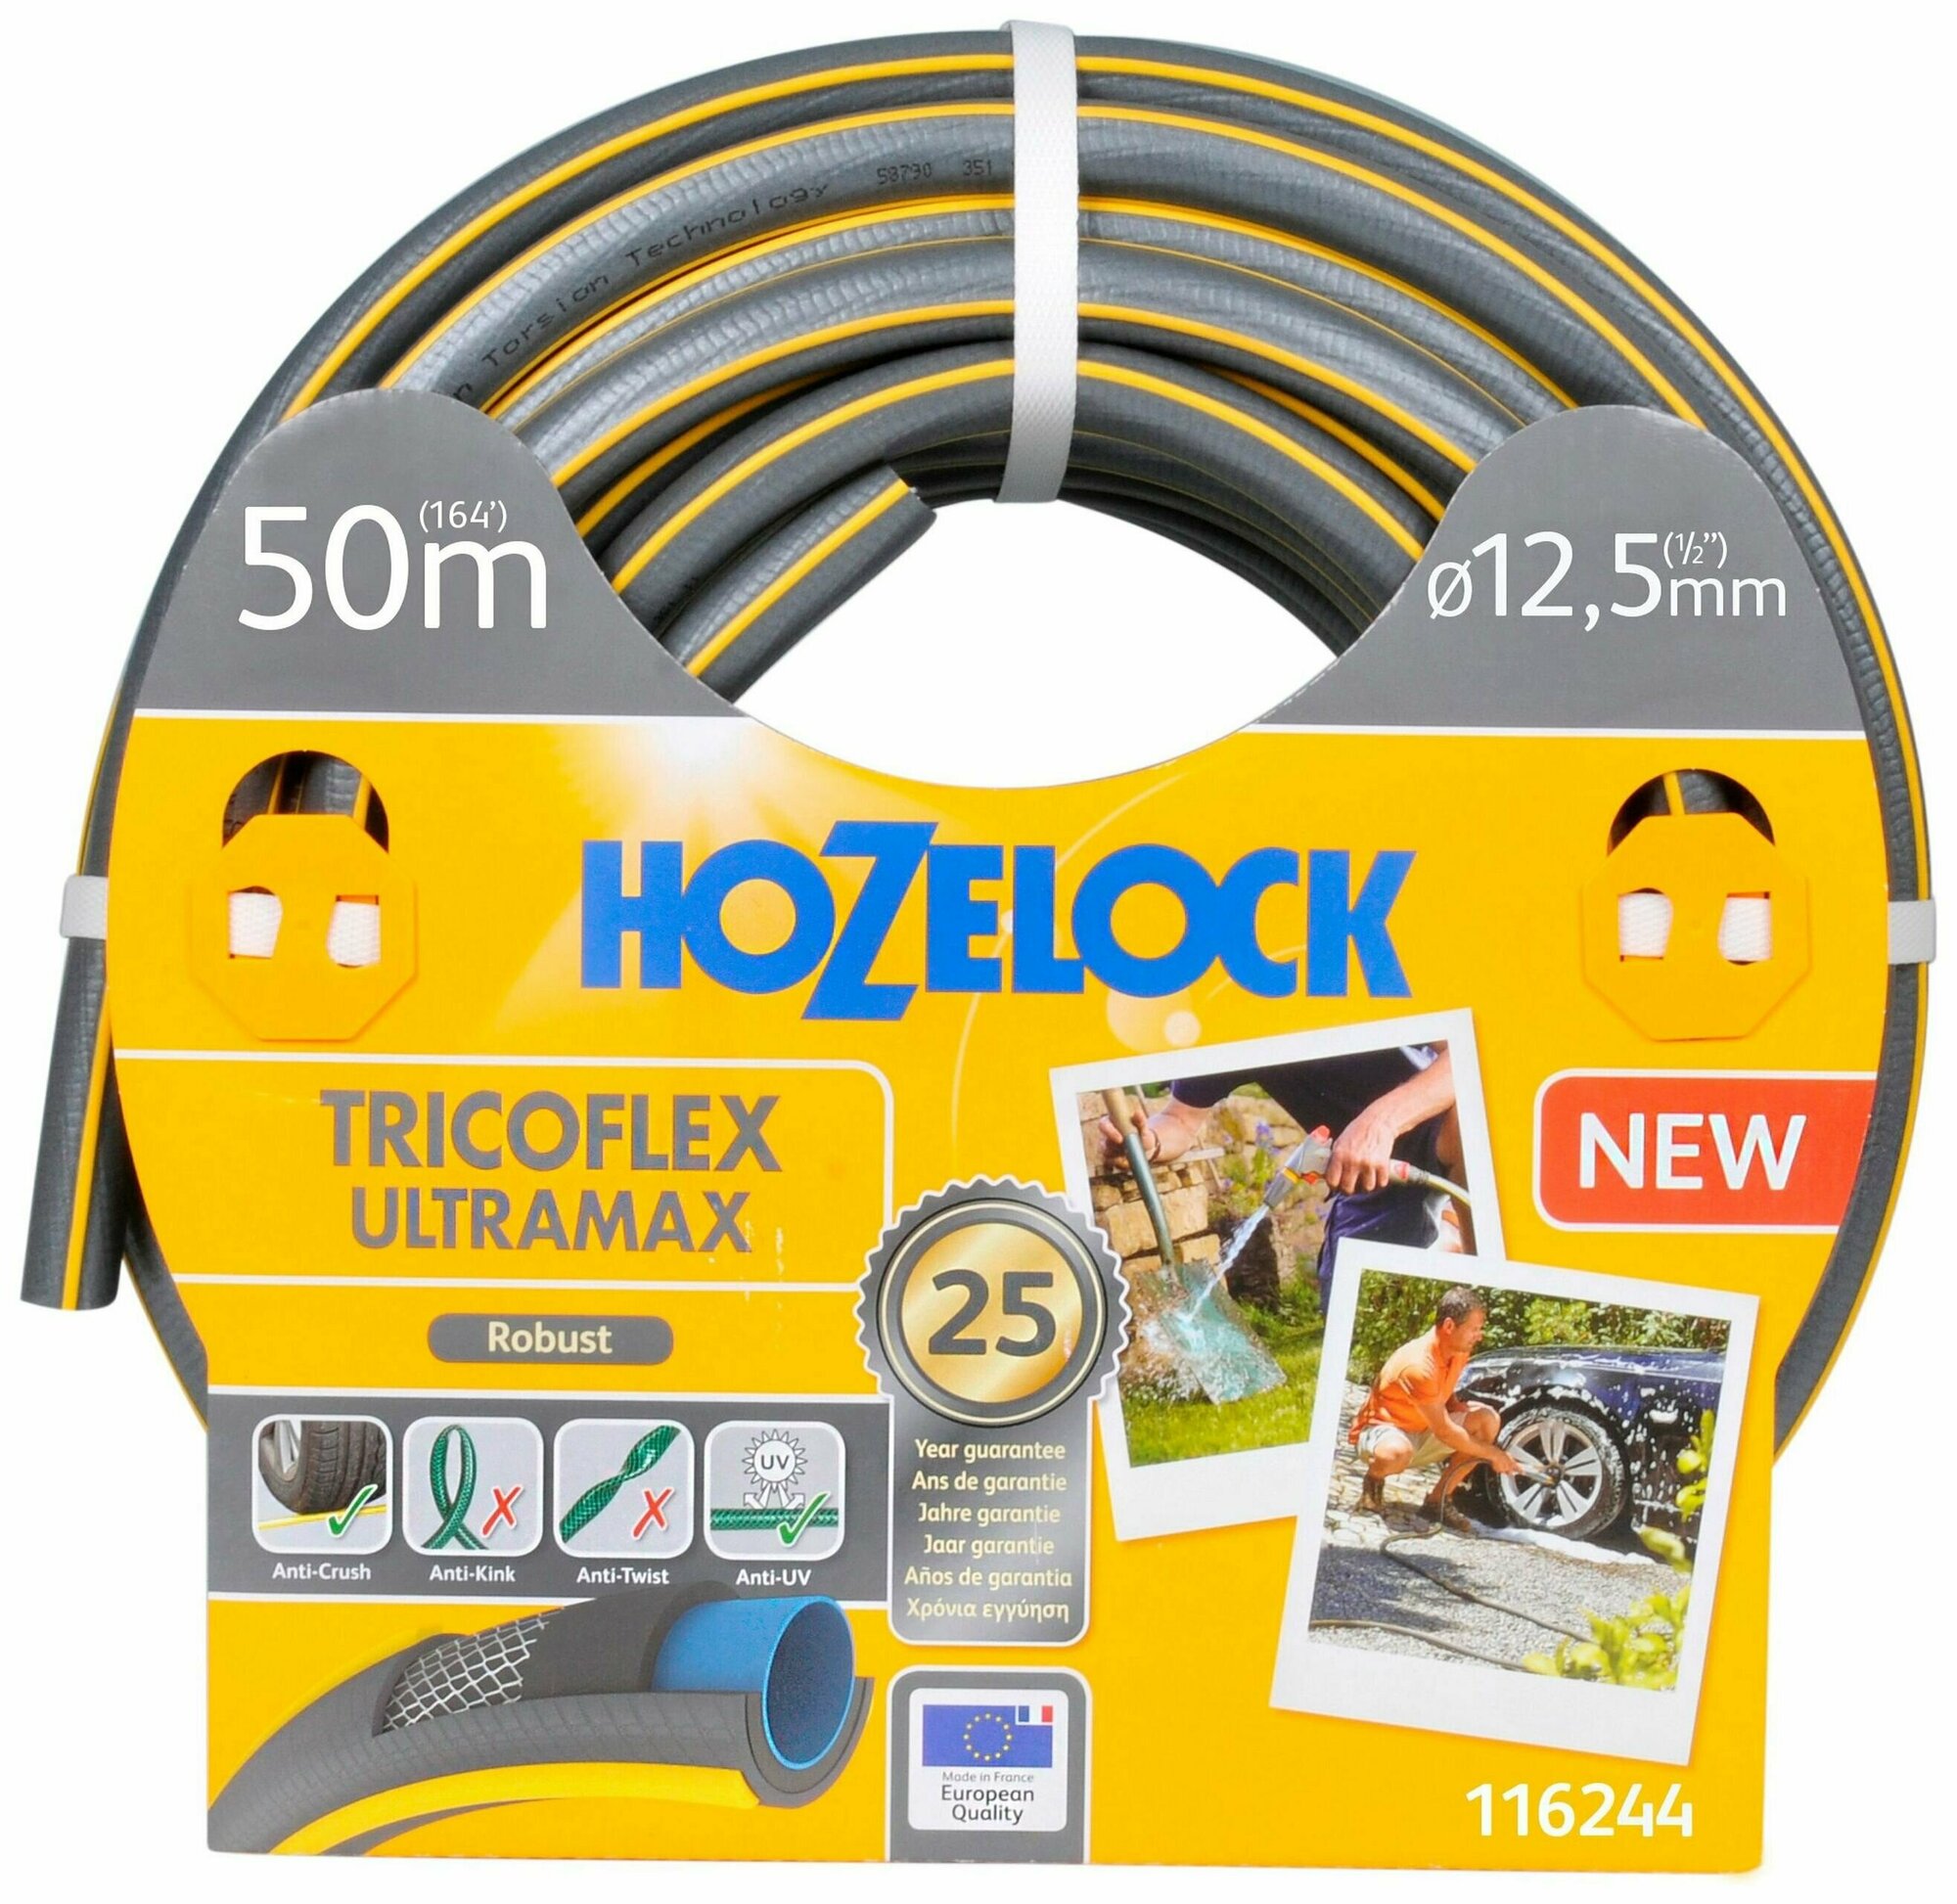 Шланг для полива HOZELOCK Tricoflex Ultramax 1/2 дюйма 50 м